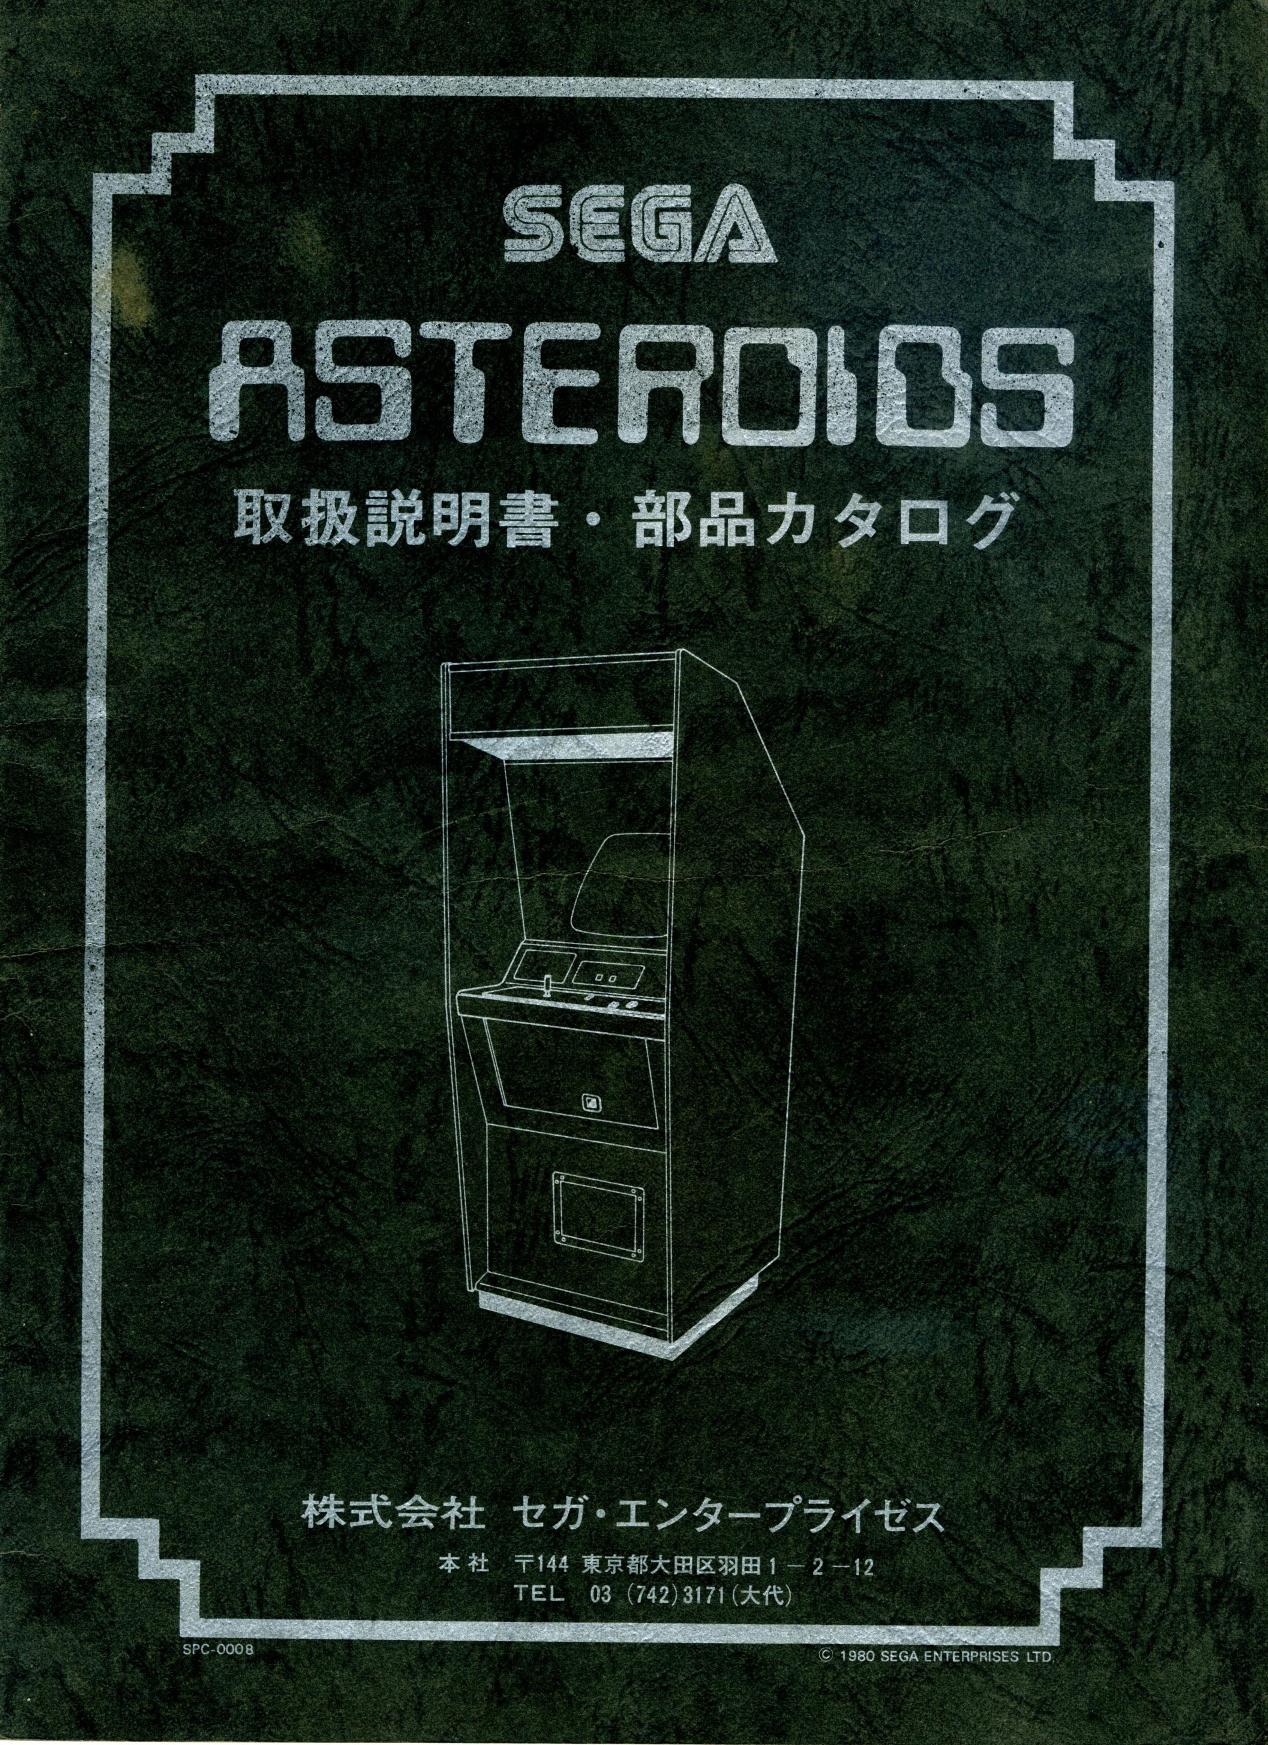 SEGA Asteroids